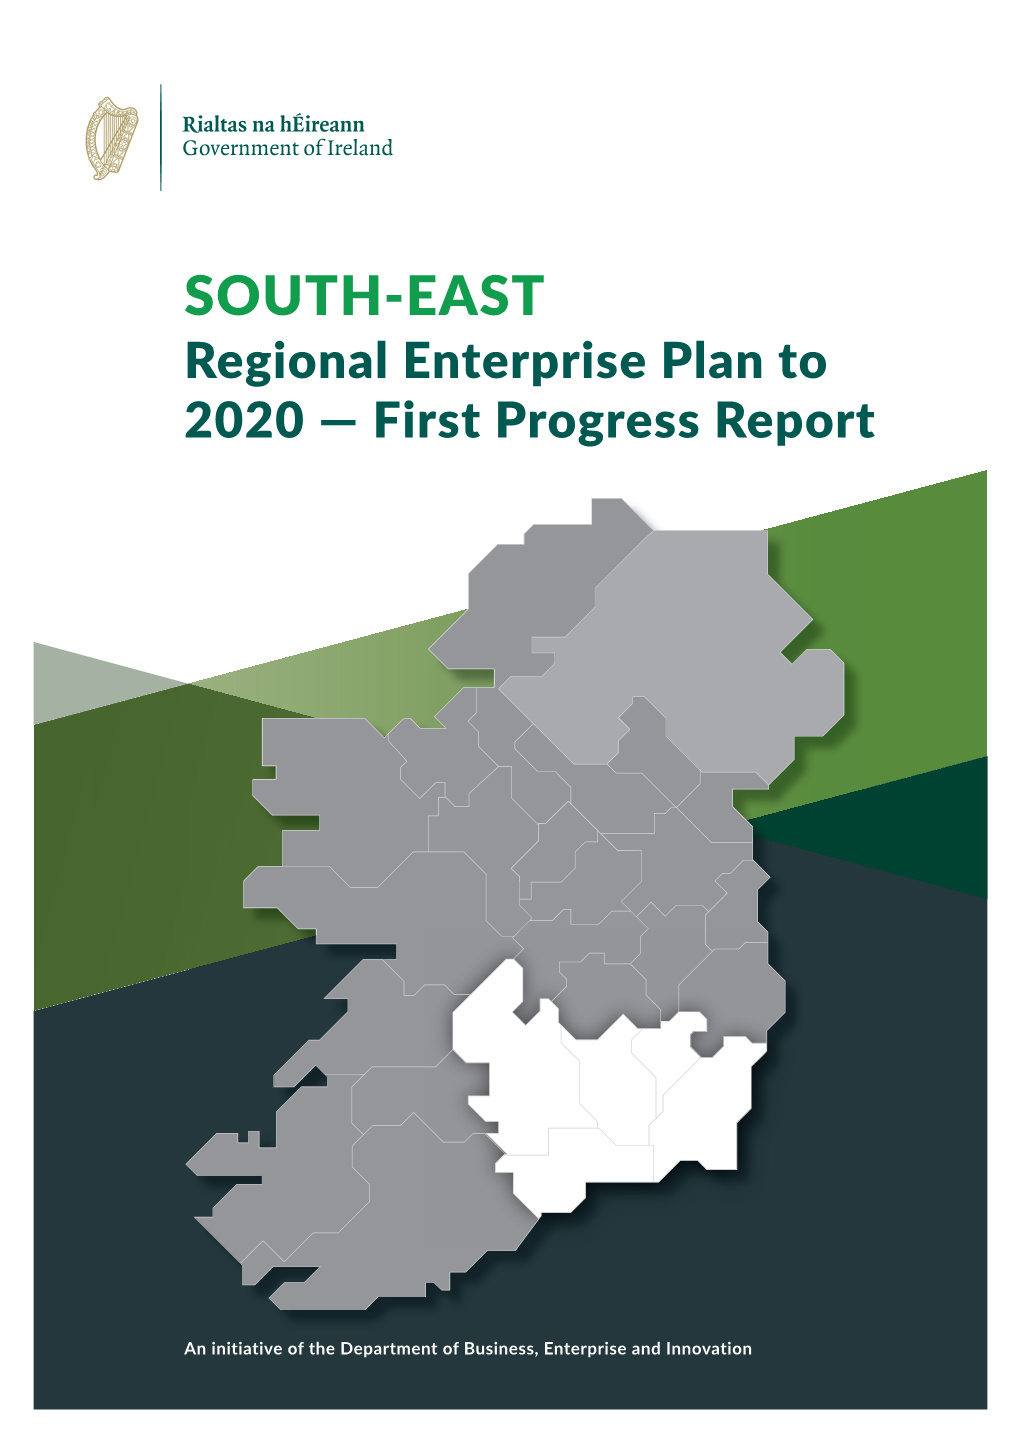 South-East Regional Enterprise Plan First Progress Report